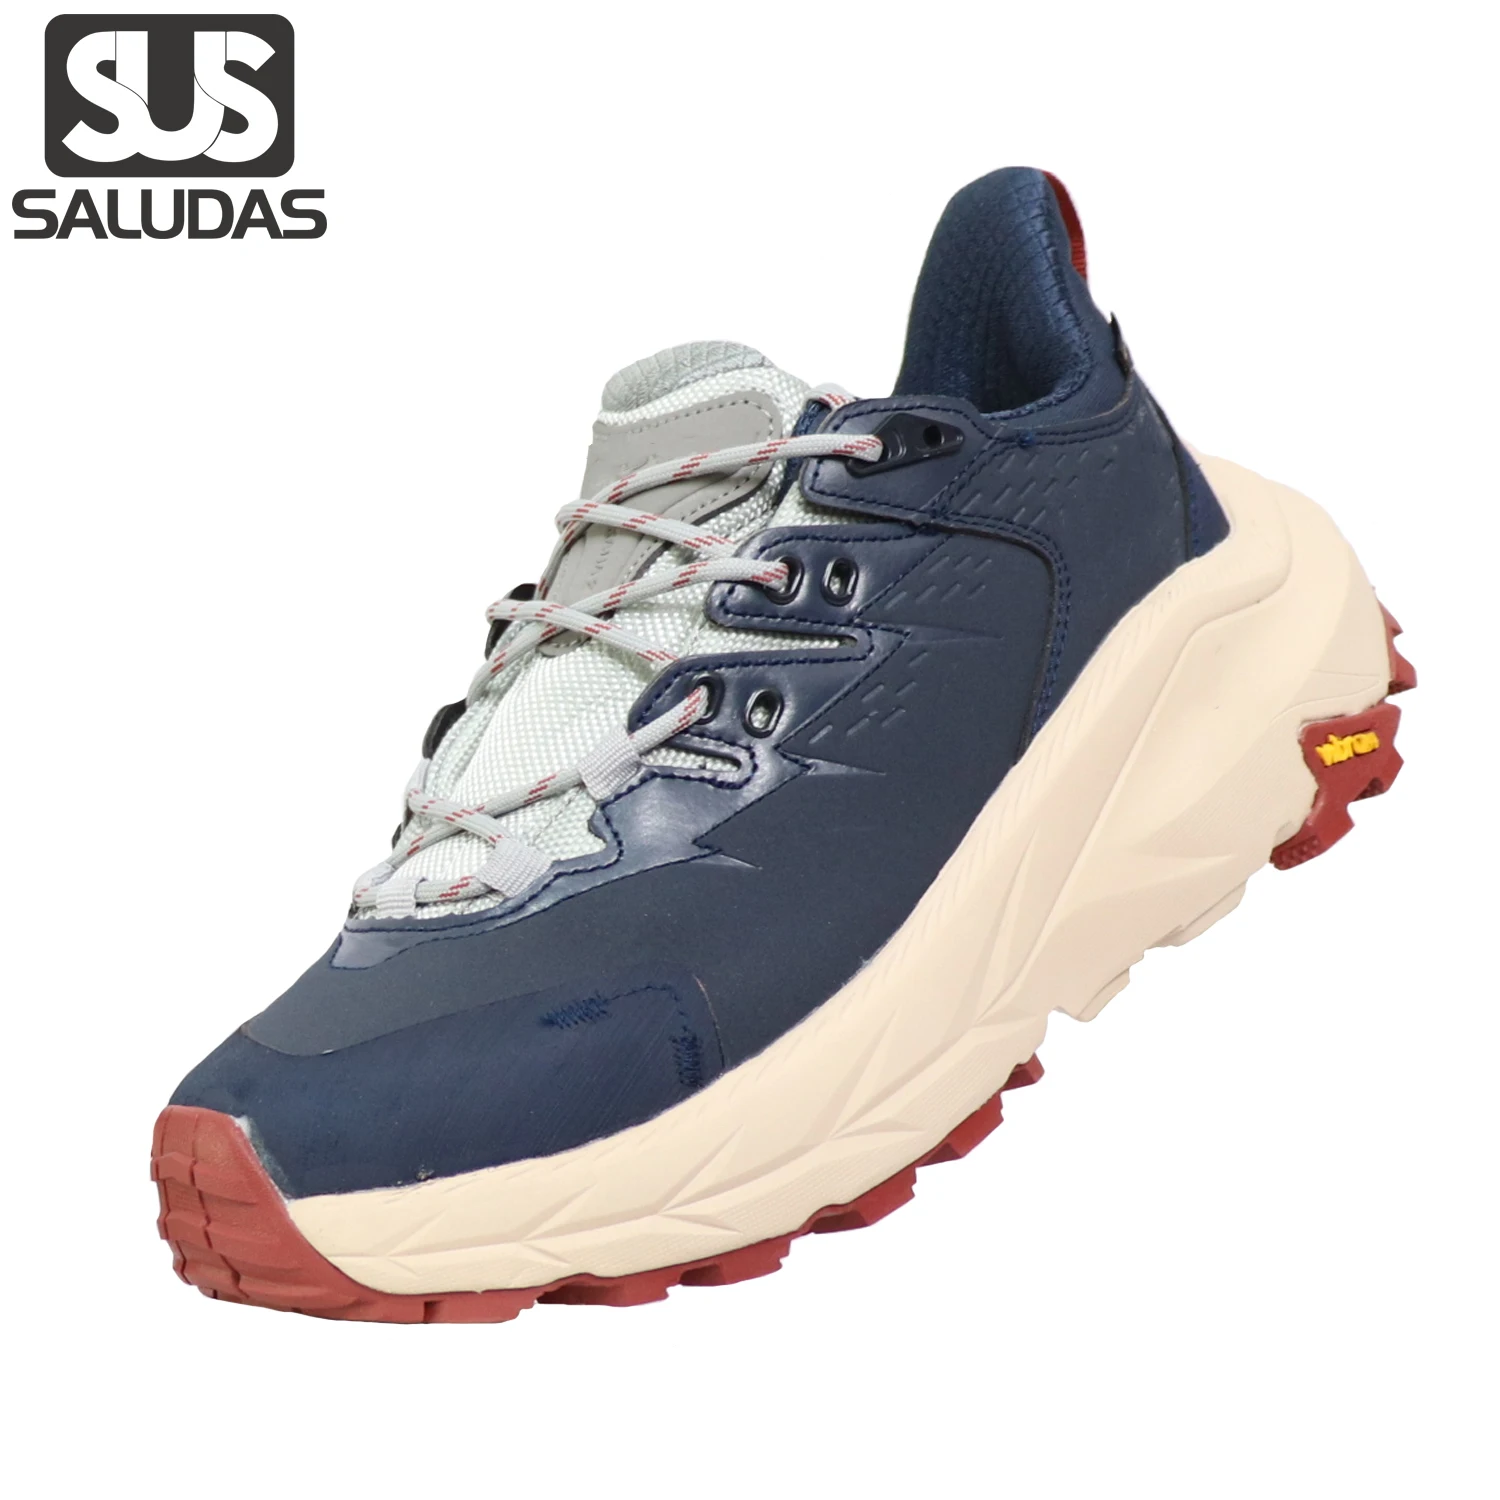 

SALUDAS Kaha 2 Low GTX Hiking Shoes for Men Waterproof Mountain Trail Running Shoes Non-slip Jungle Camping Trekking Sneakers